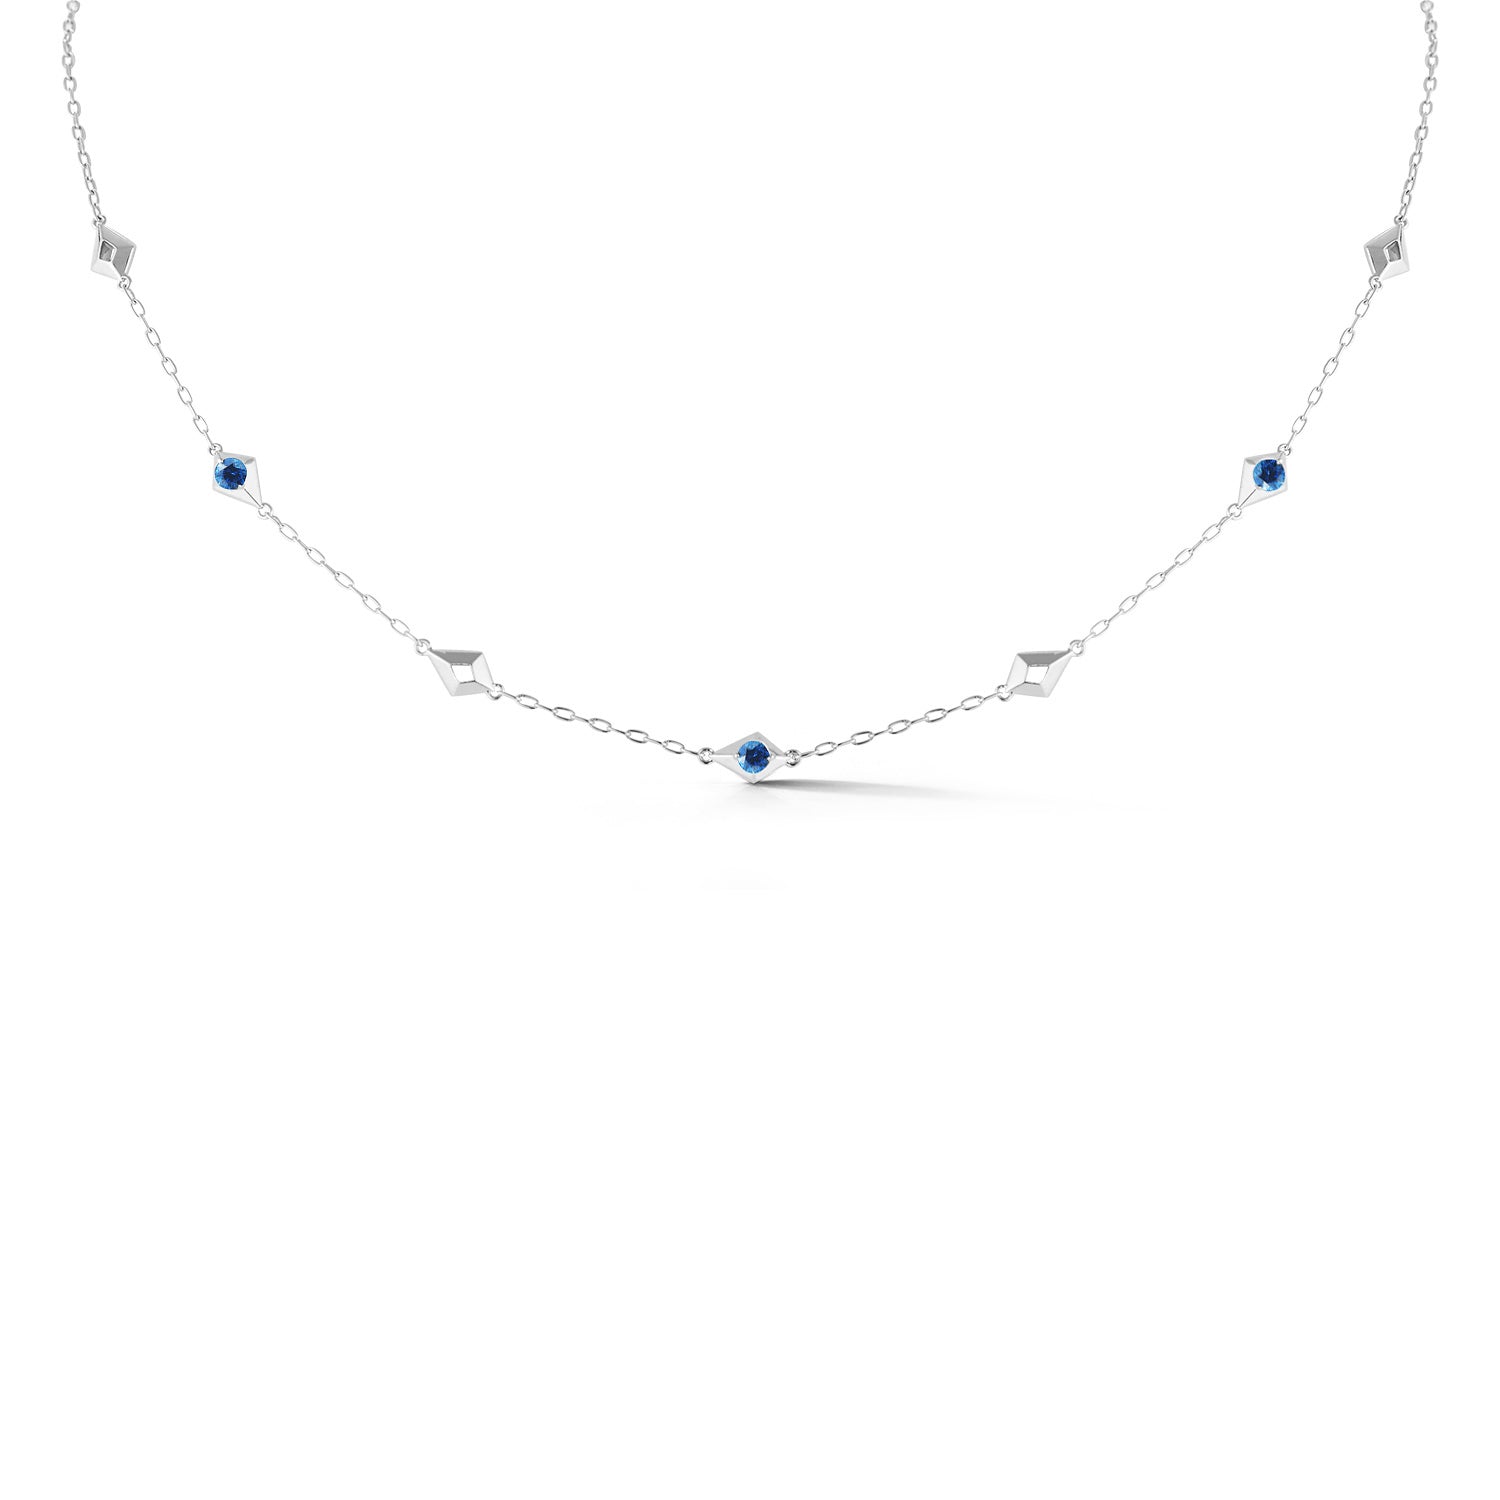 Amer Sapphire Necklace designed by Dear Letterman Jewellery